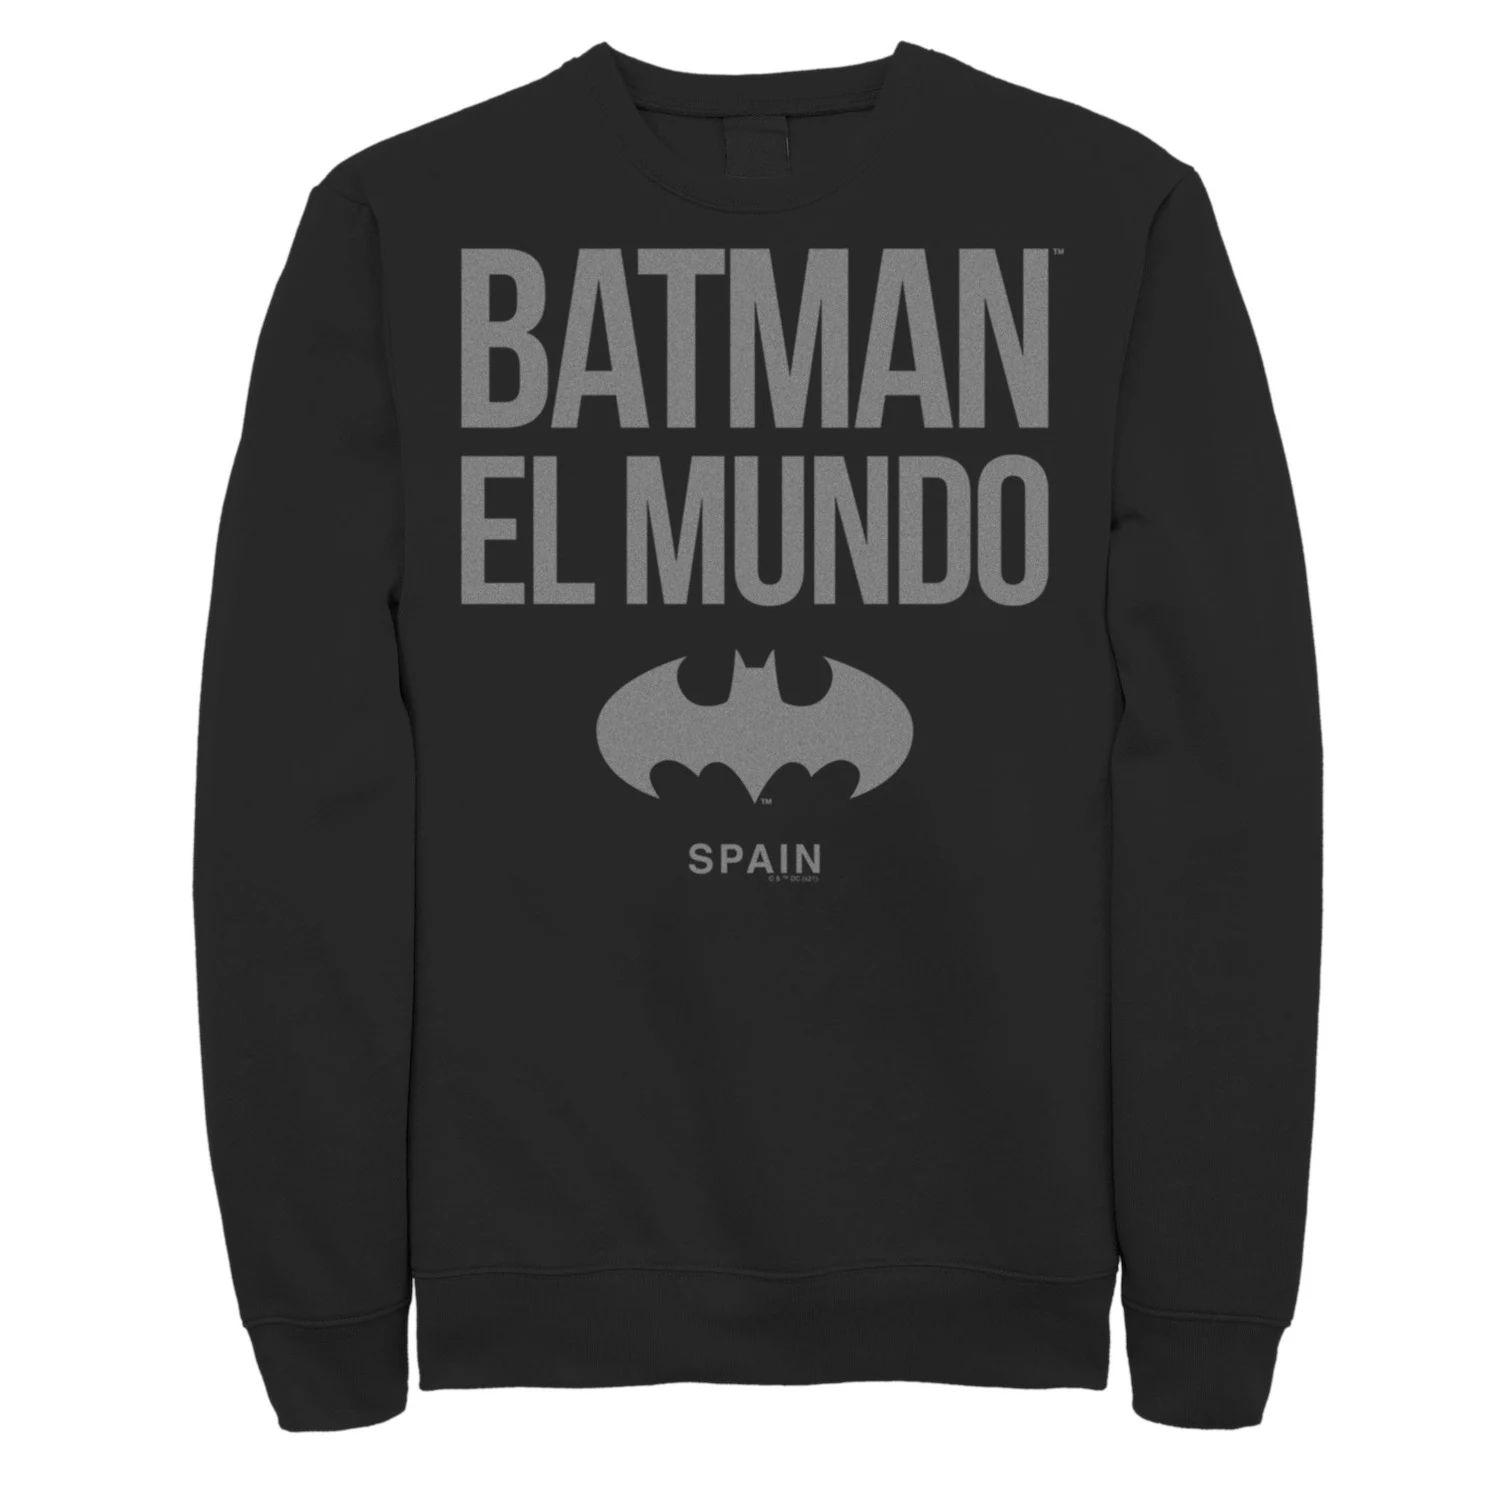 кружка pyramid кружка dc comics batman shadows Мужской свитшот с логотипом Batman: El Mundo Spain Icon Licensed Character